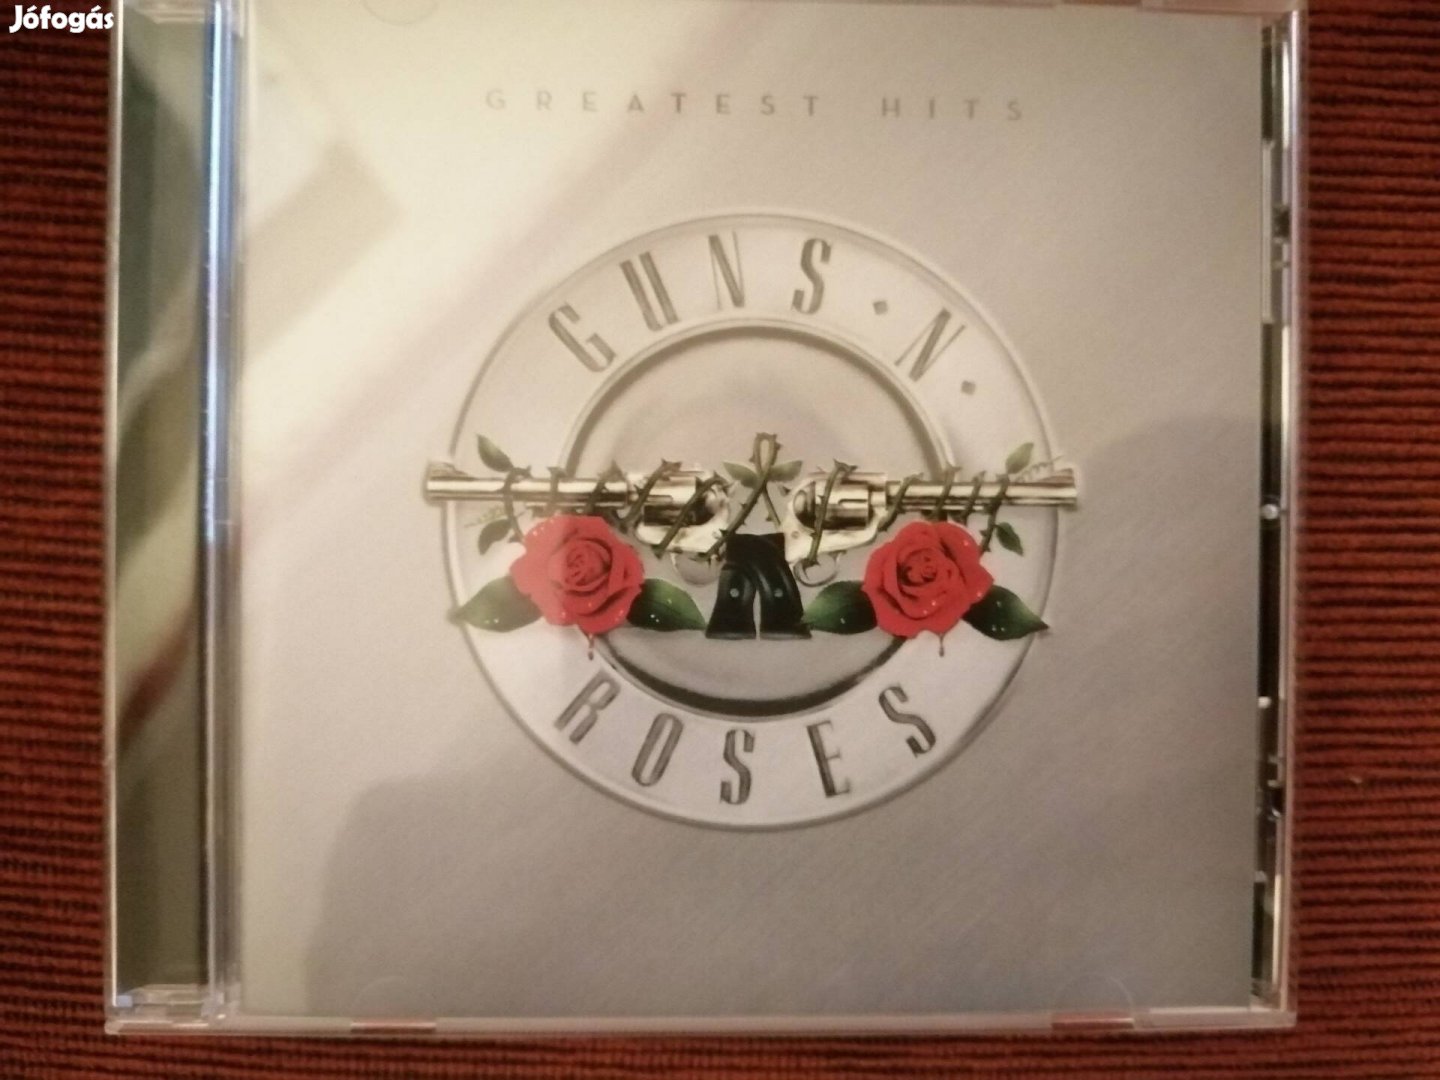 Guns 'n Roses Greatest Hits CD eladó 